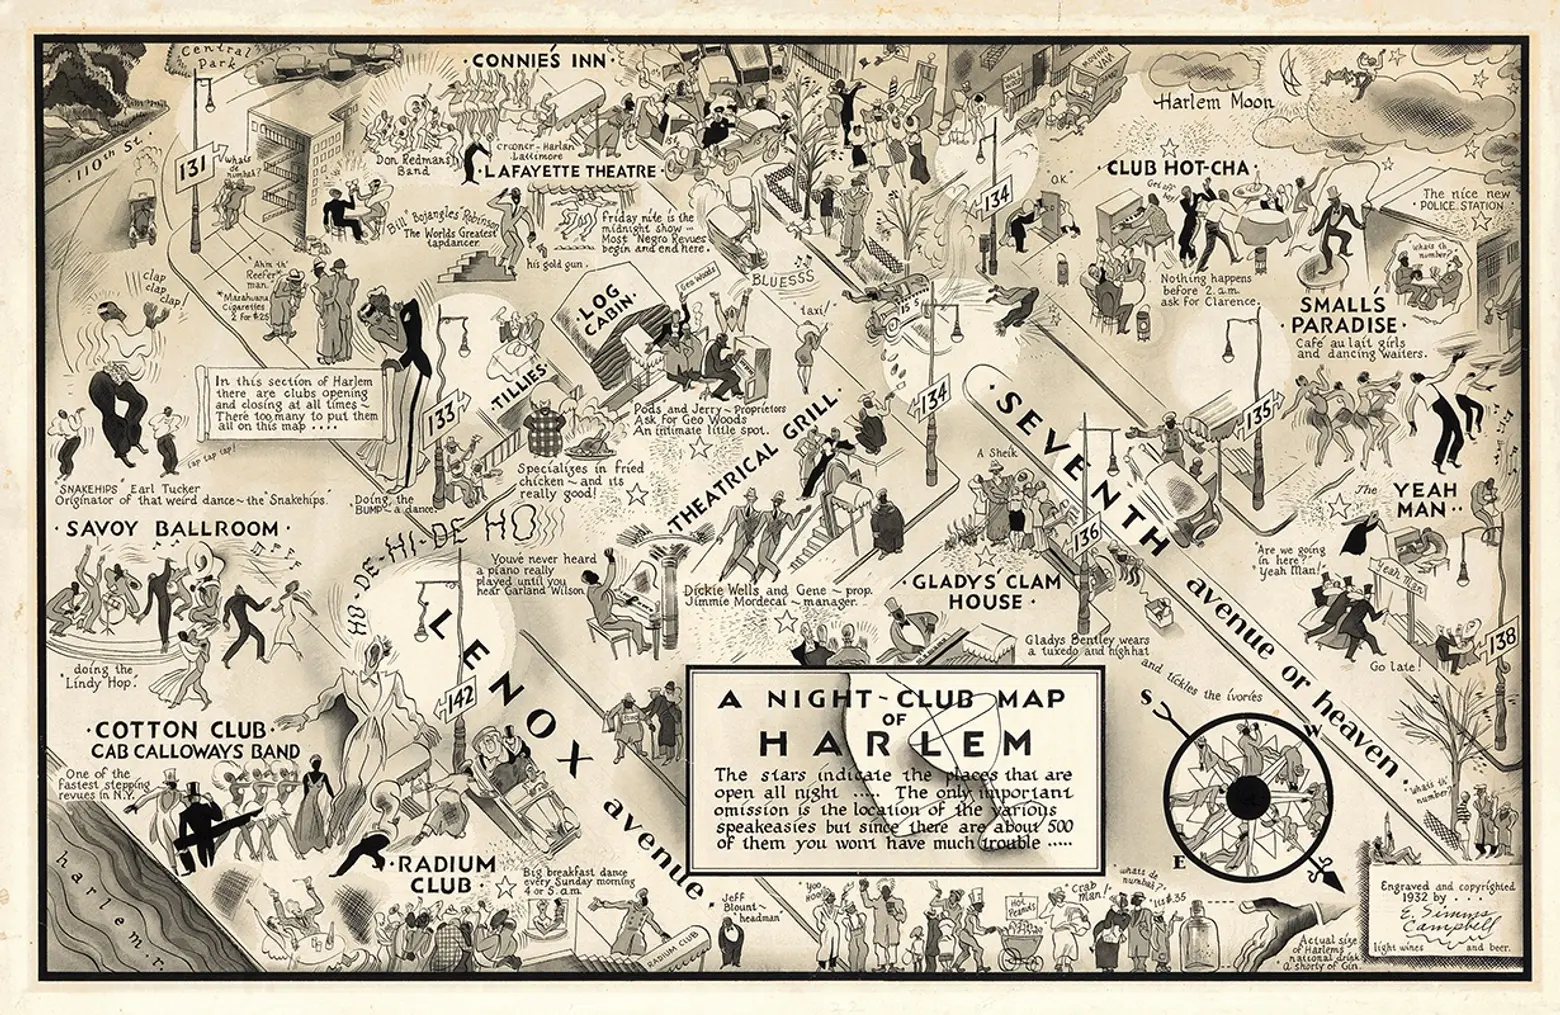 1932 map illustrates a vibrant nightlife during the Harlem Renaissance